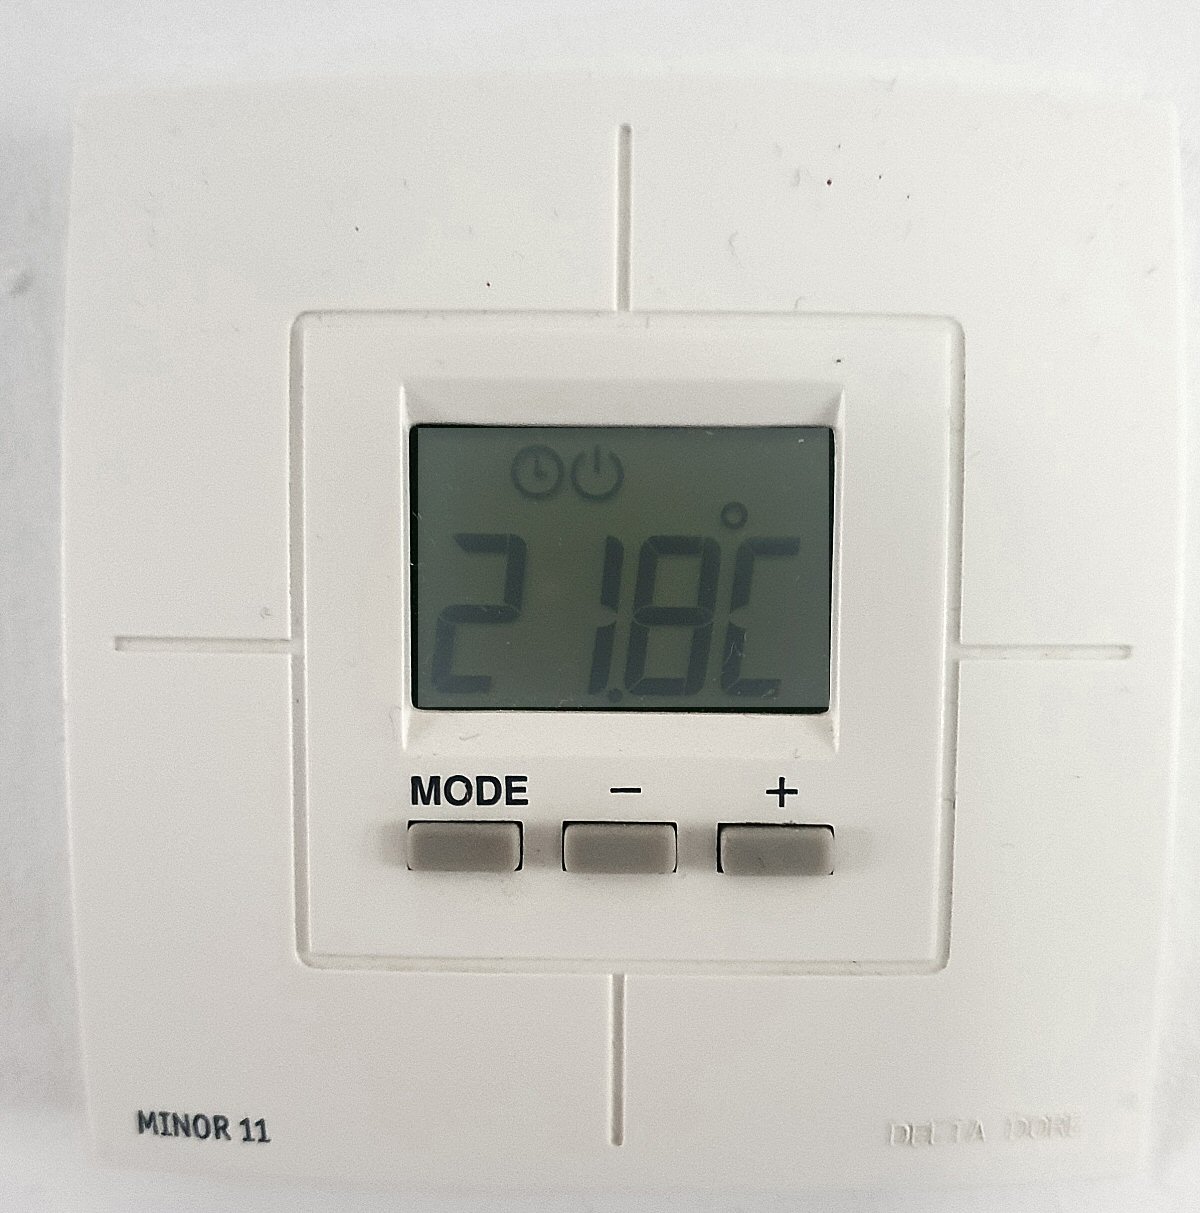 thermostat Minor 11